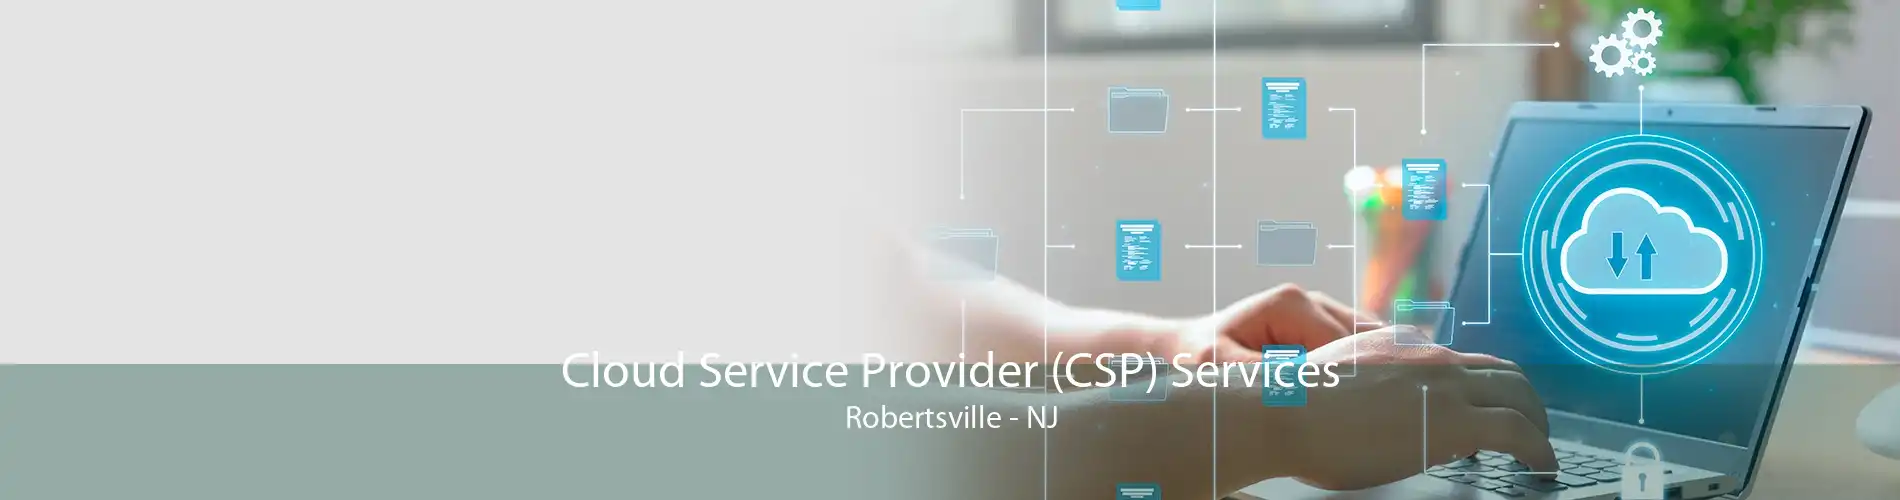 Cloud Service Provider (CSP) Services Robertsville - NJ